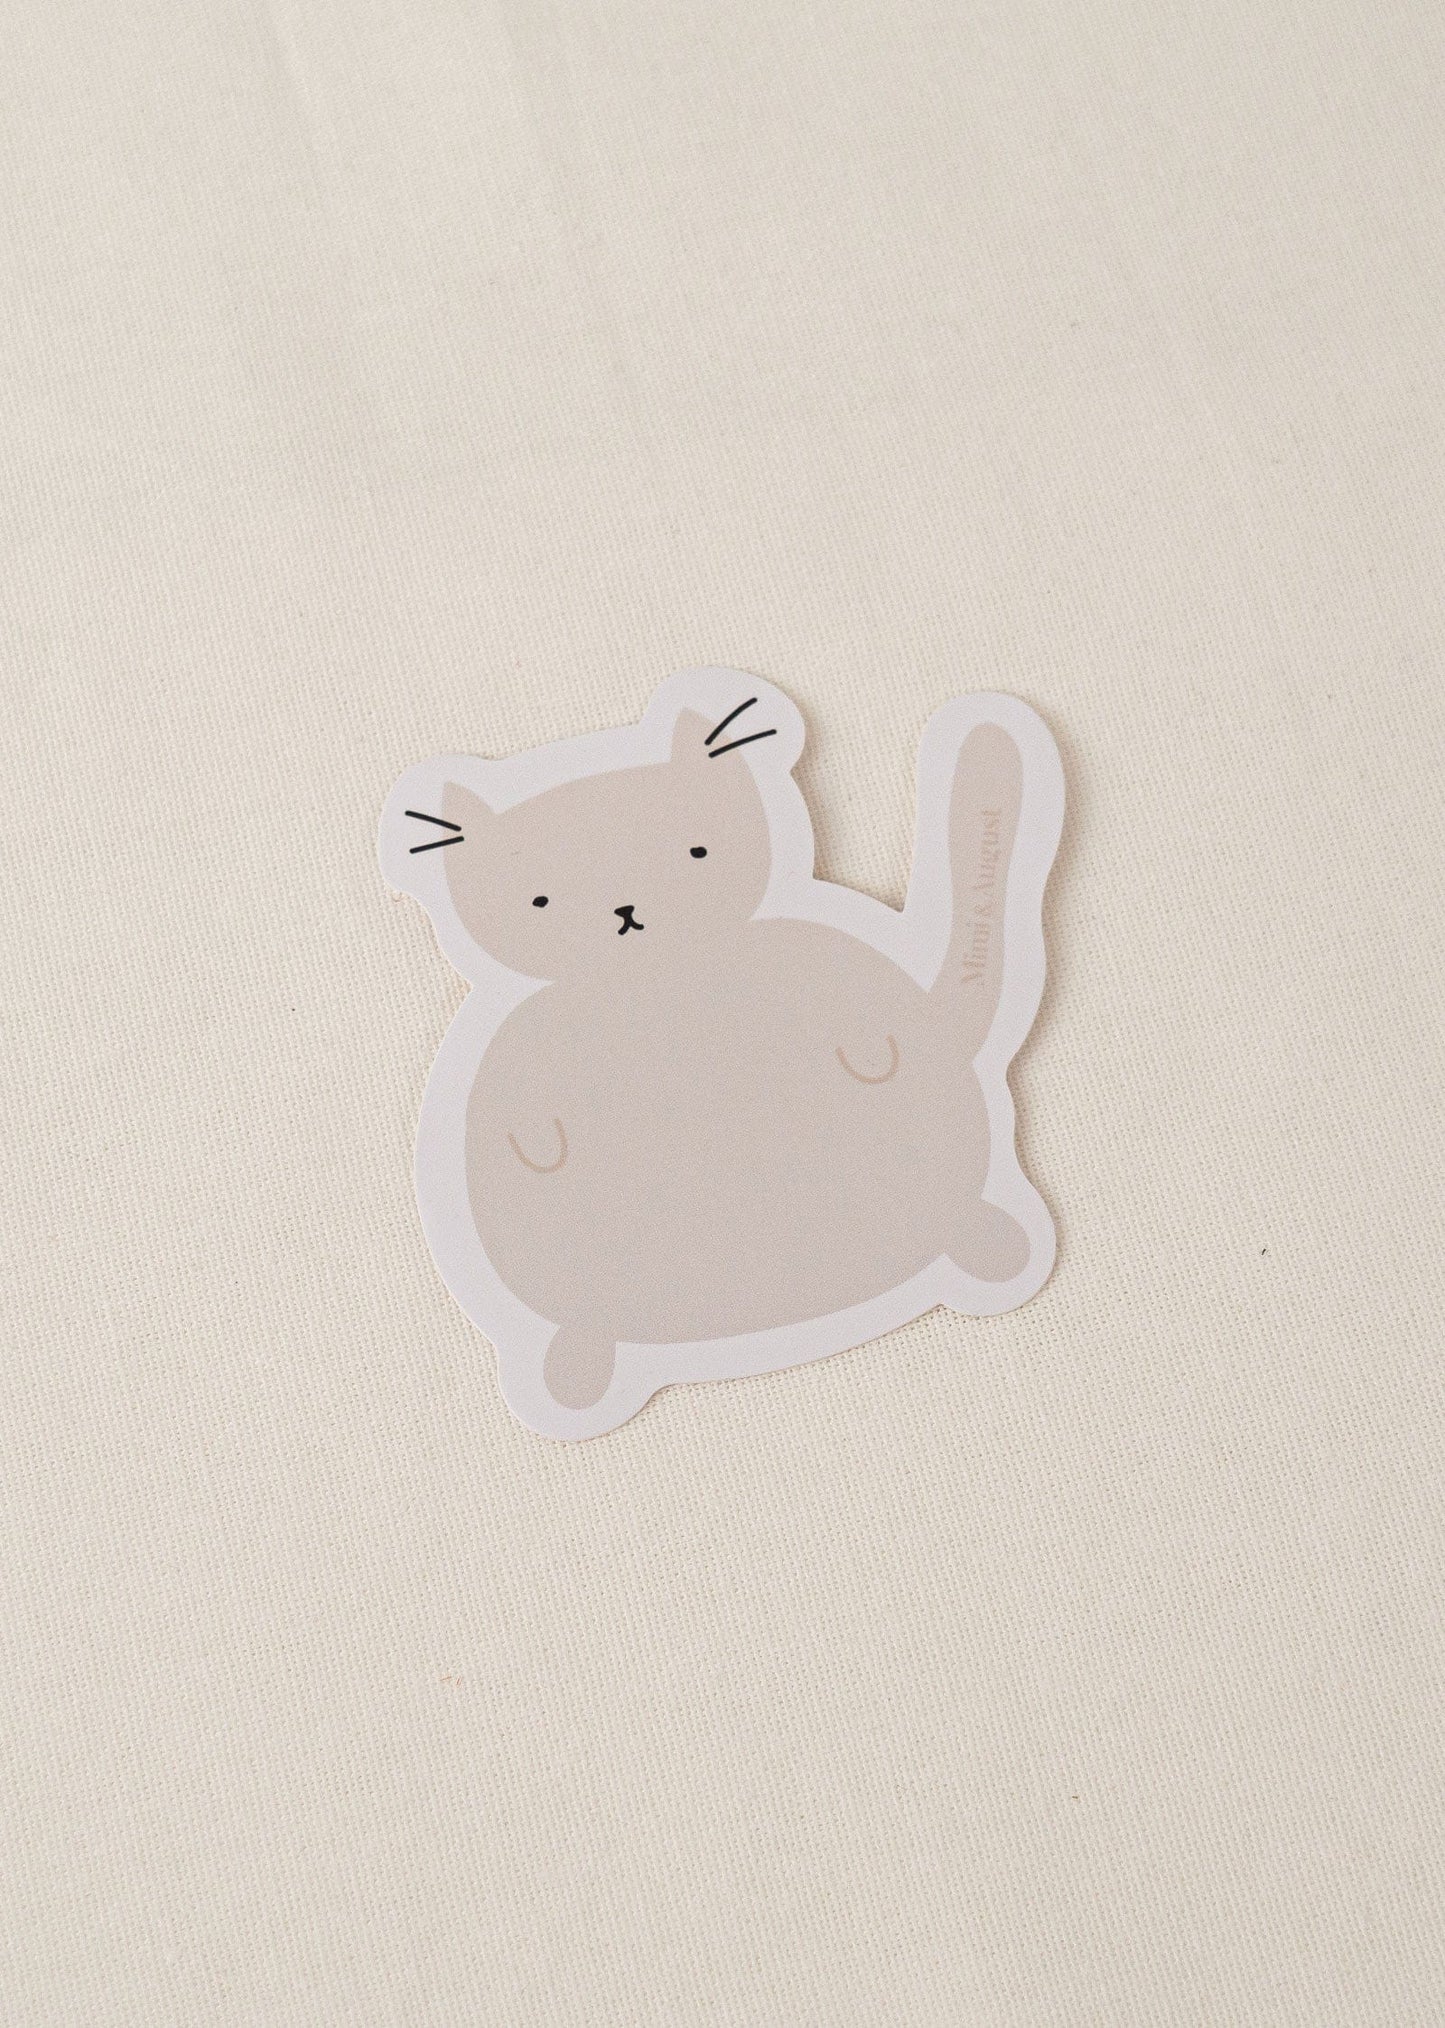 Charlotte the Cat Vinyl Sticker